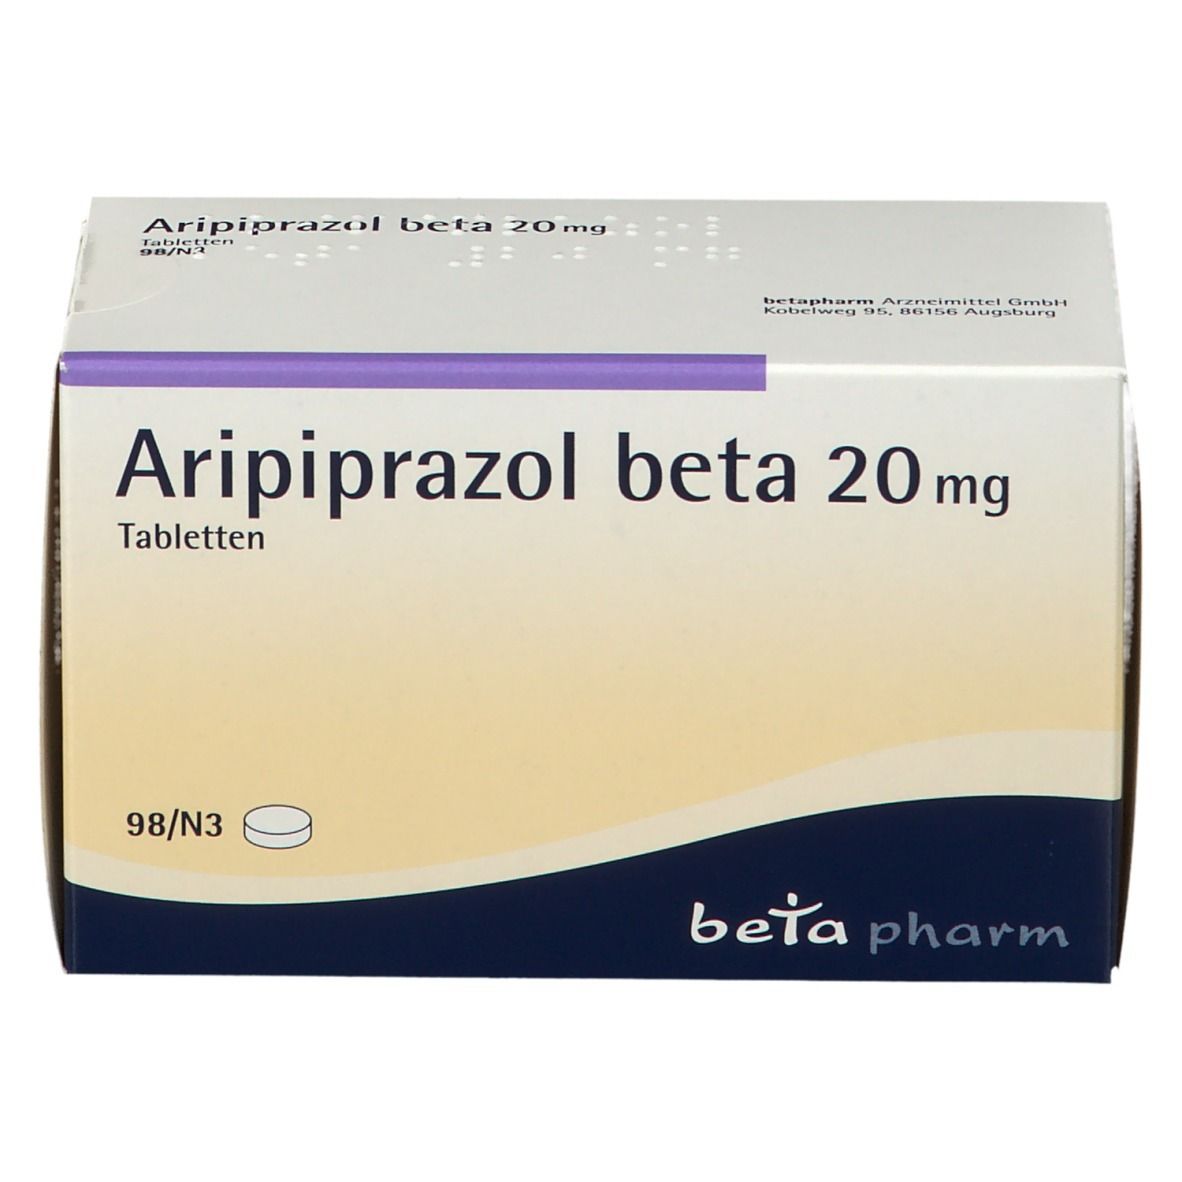 Aripiprazol beta 20 mg